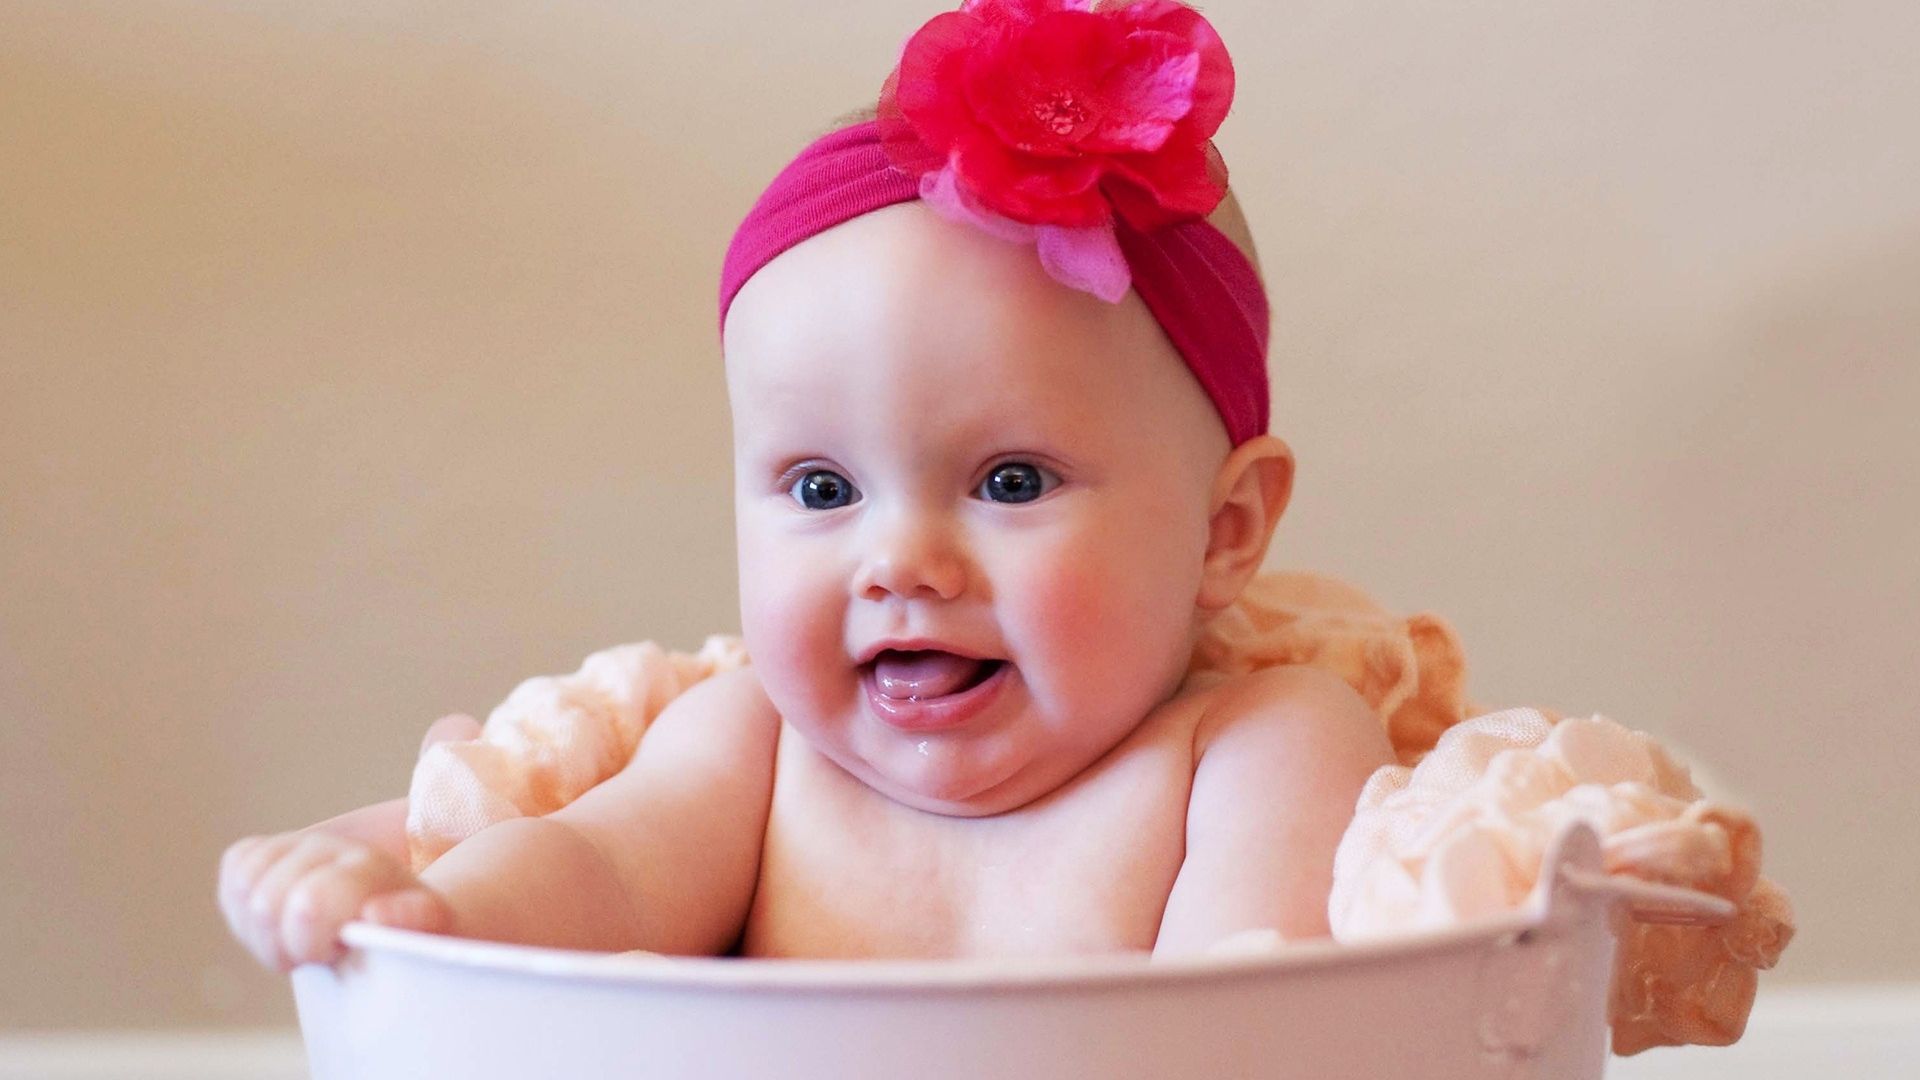 Free download Cute baby girl desktop wallpaper HD Wallpaper [1920x1200] for your Desktop, Mobile & Tablet. Explore